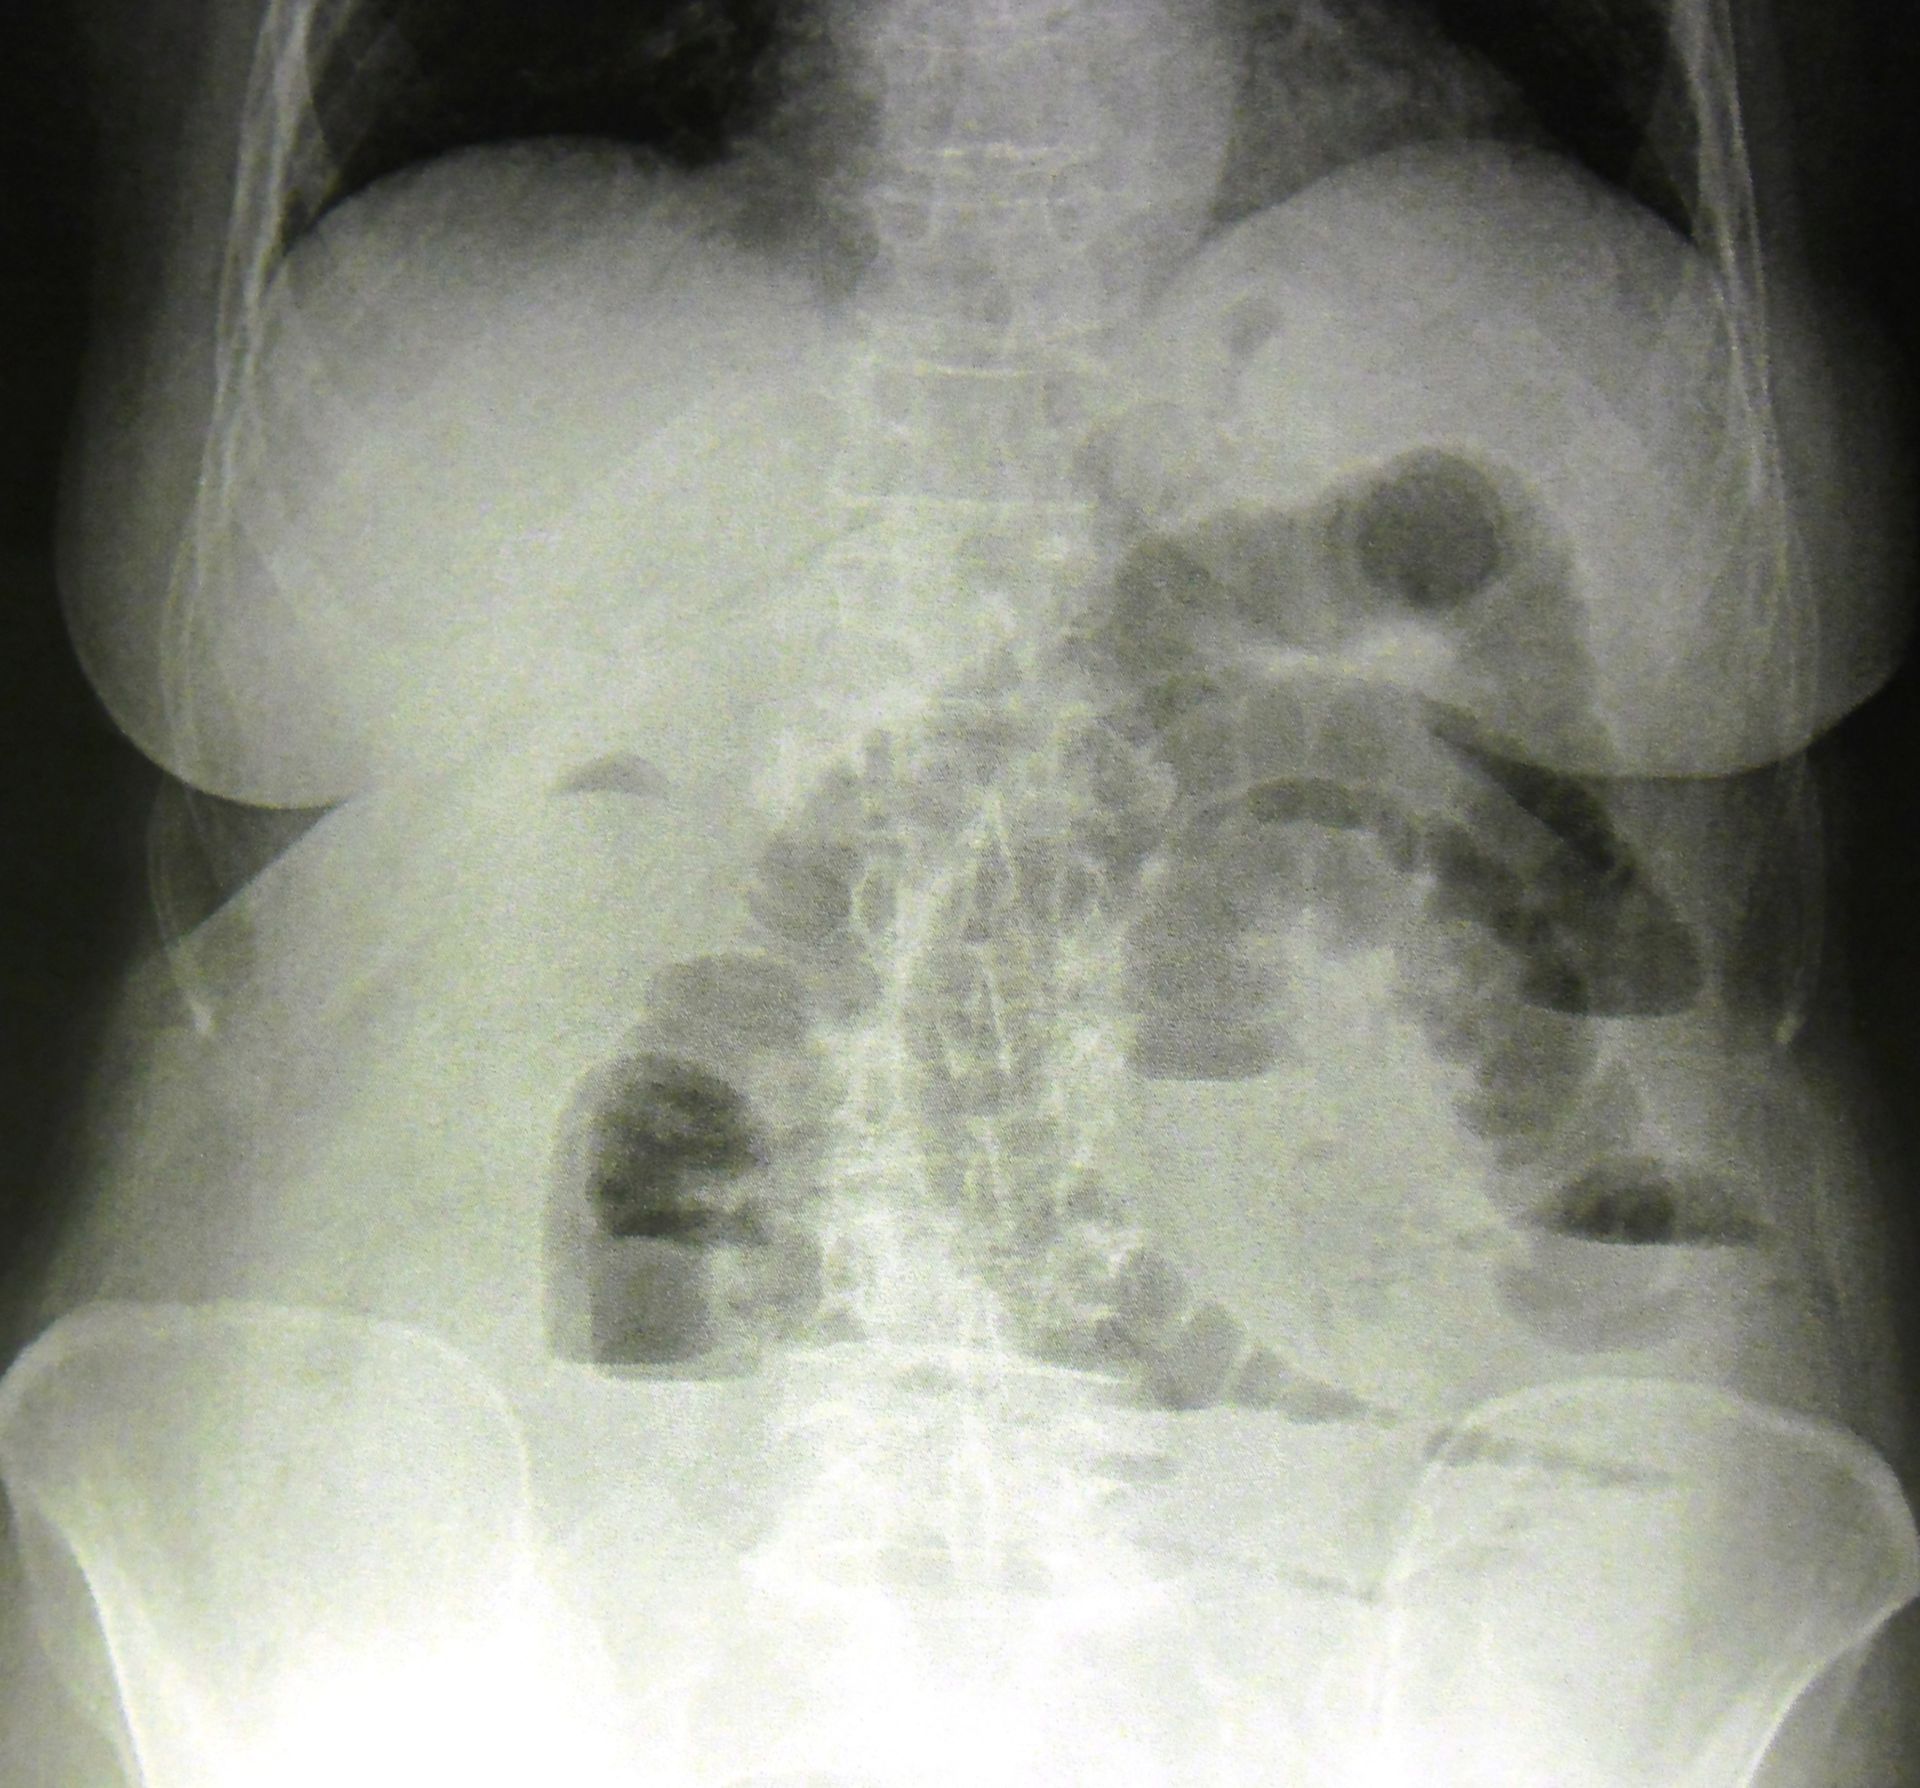 intestinal obstruction due to small bowel adhesions